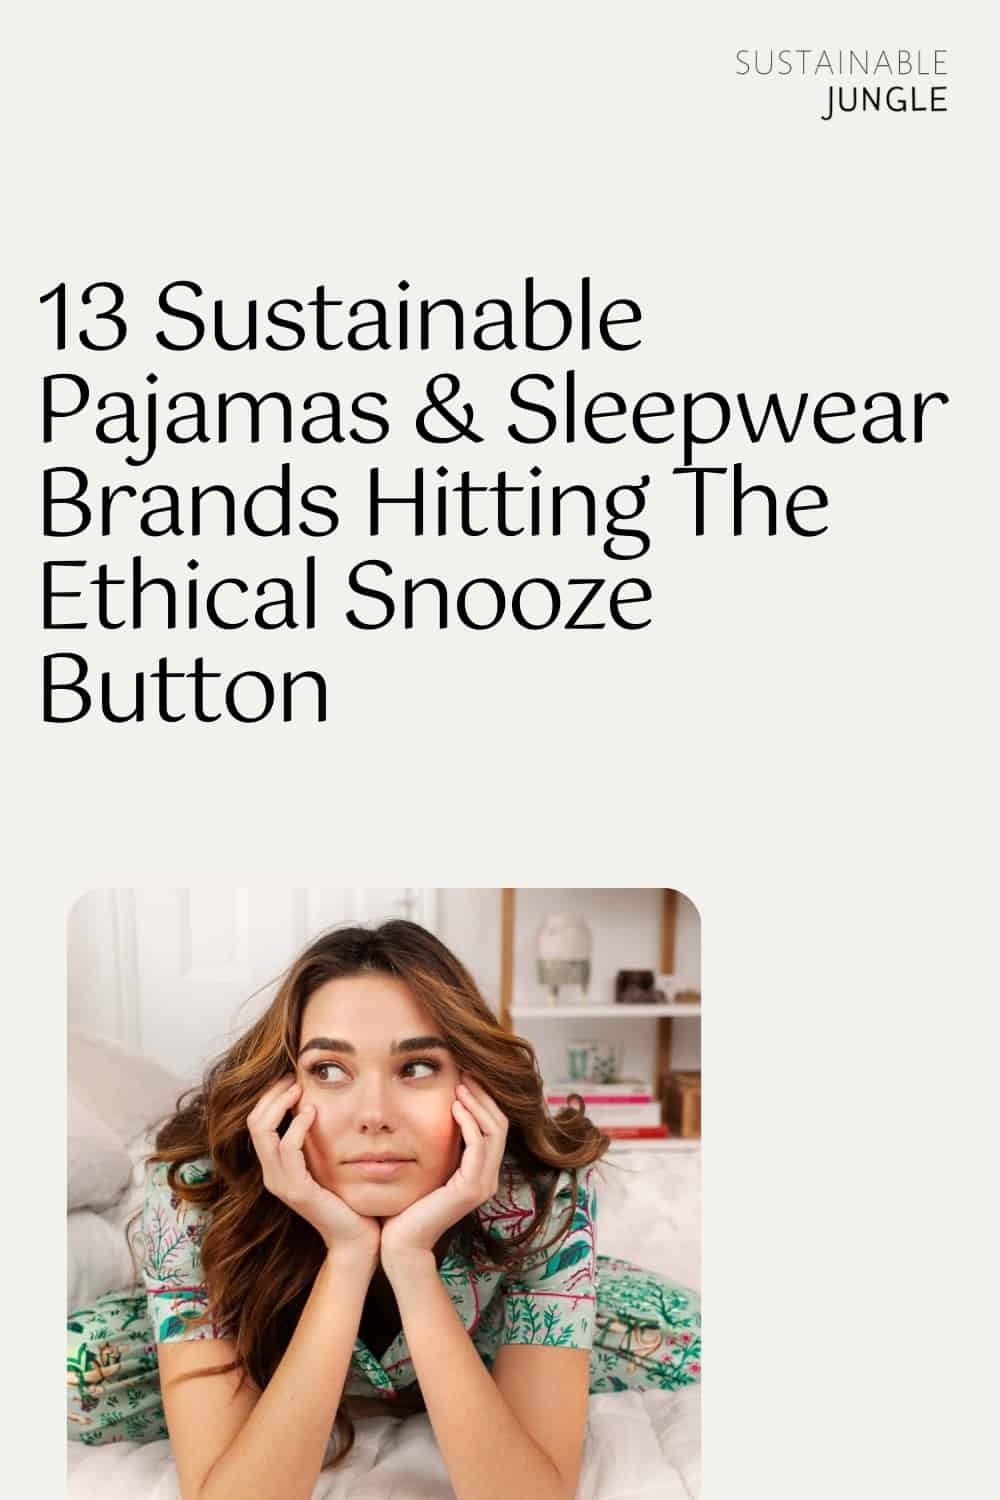 Sustainable Pajamas & Sleepwear Brands Hitting The Ethical Snooze Button #sustainablepajamas #sustainablepajamasformen #sustainablepajamasforwomen #bestsustainablepajamas #ethicalpajamas #ecofriendlypajamas #sustainablejungle Images by Printfresh